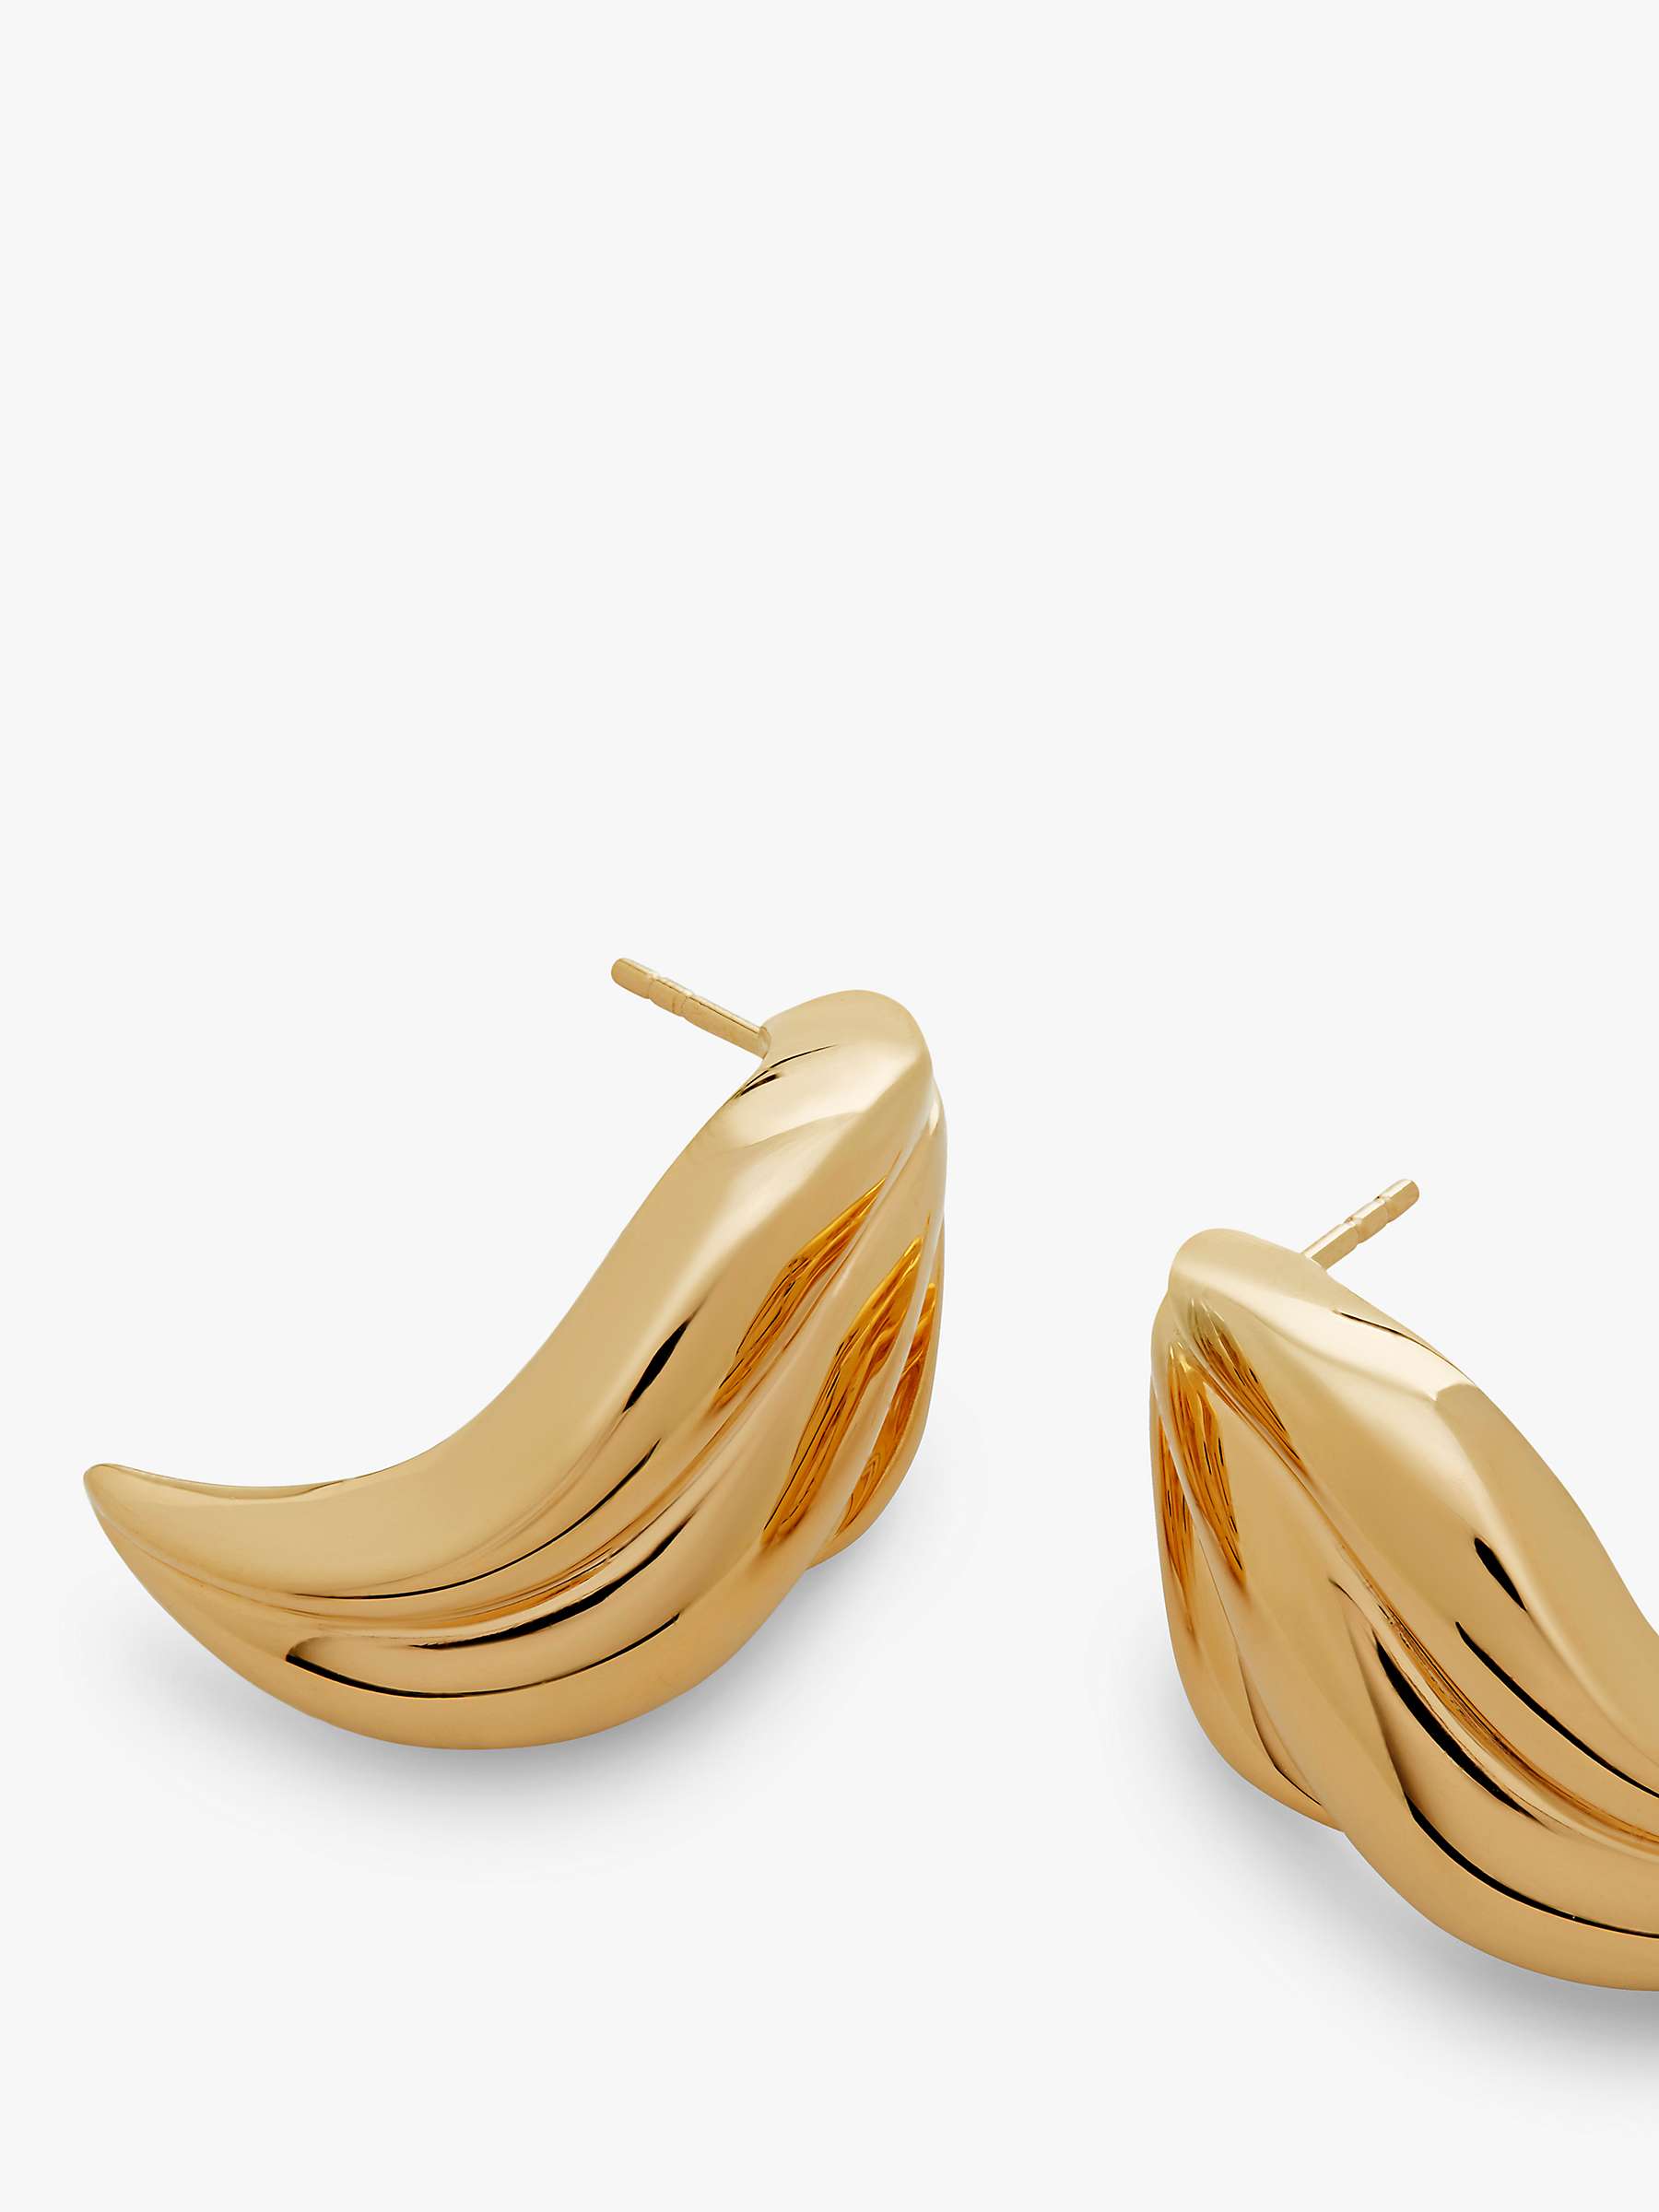 Buy Monica Vinader Swirl Bold Stud Earrings, Gold Online at johnlewis.com